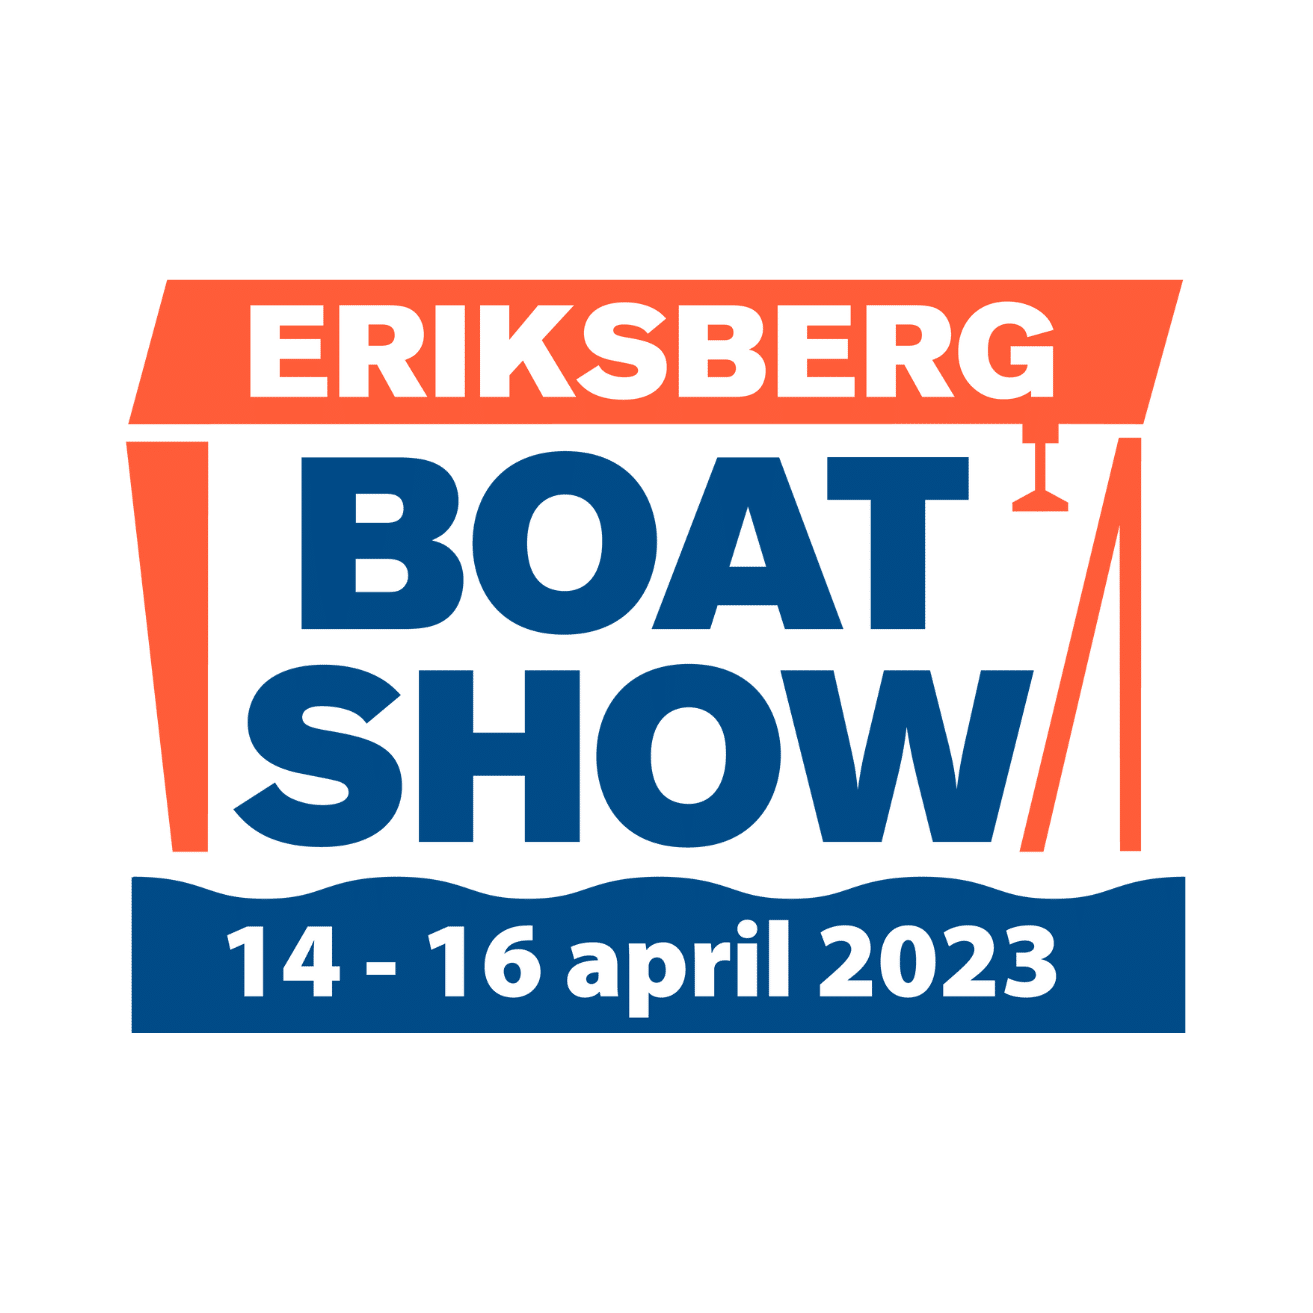 eriksberg boat show